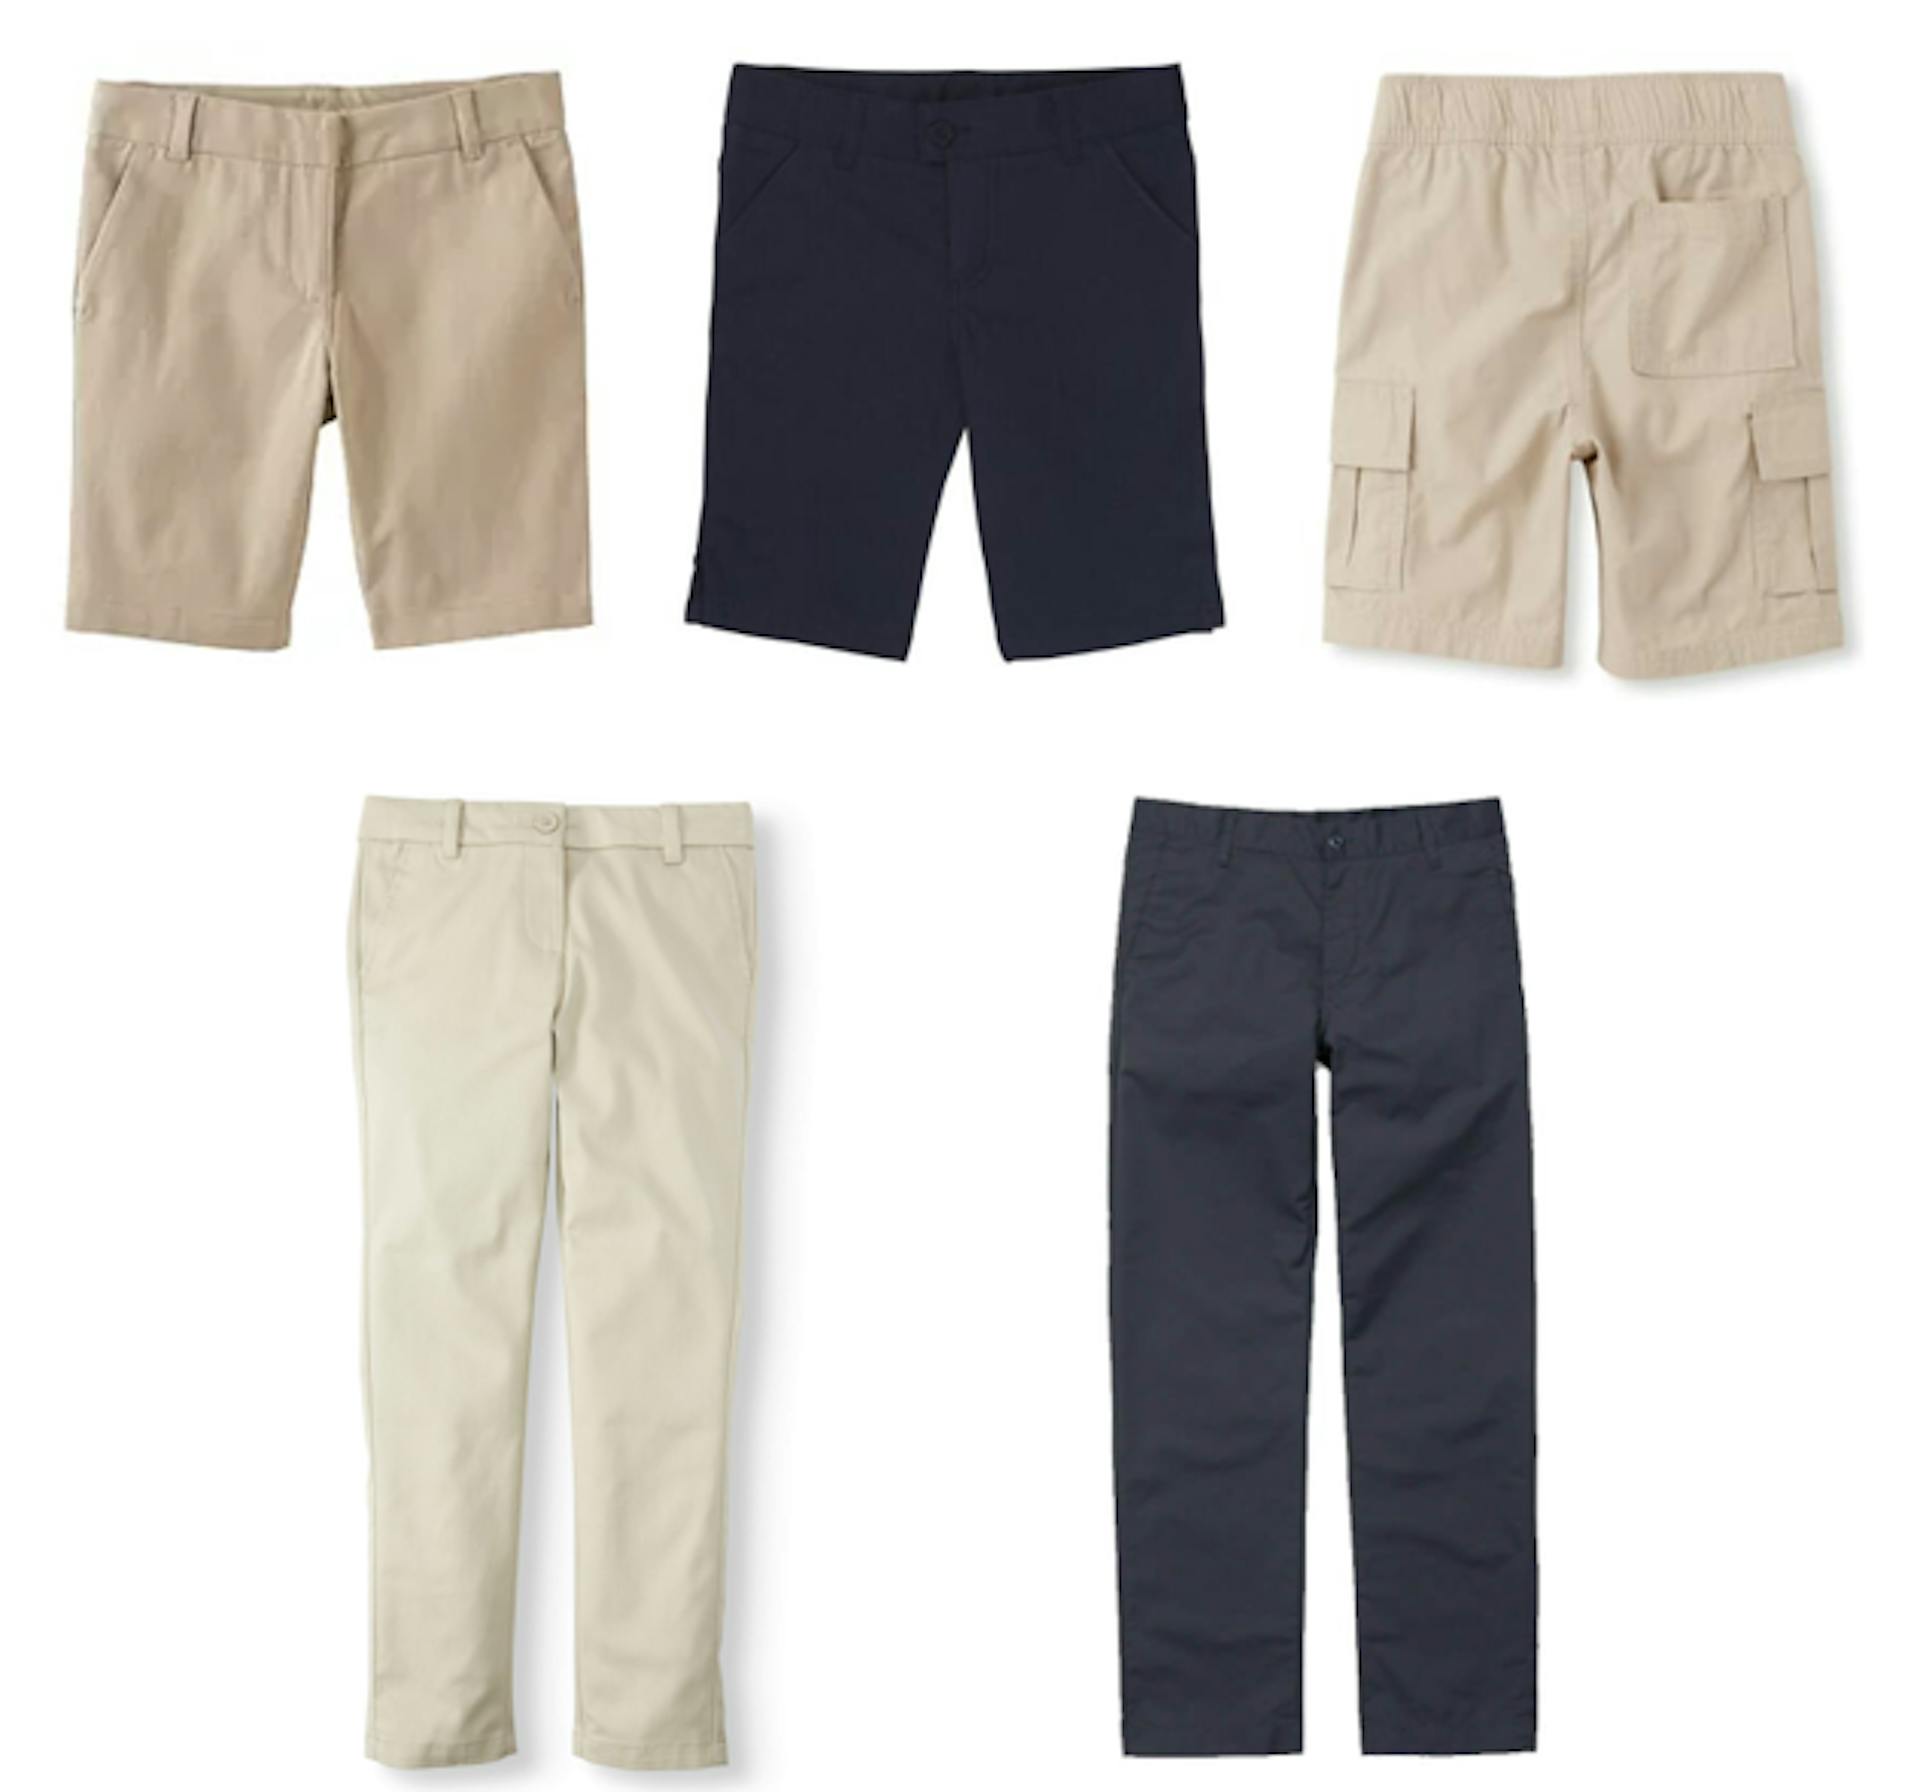 Boys School Uniform Bottoms: Pants & More